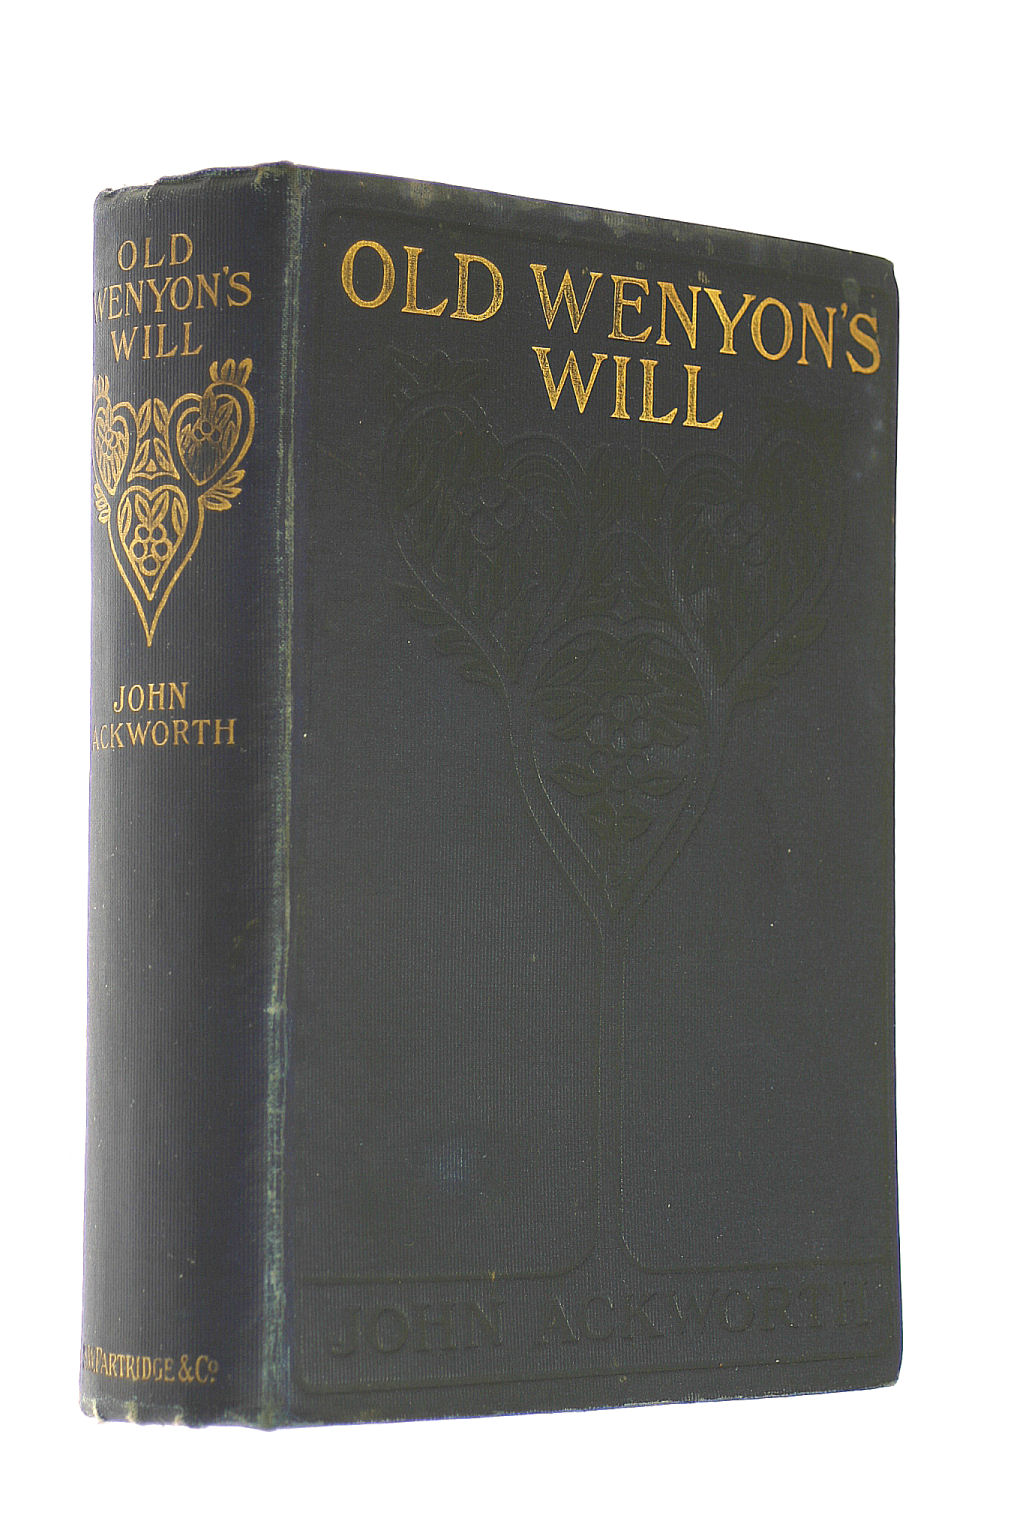 ACKWORTH, JOHN - Old Wenyon's Will